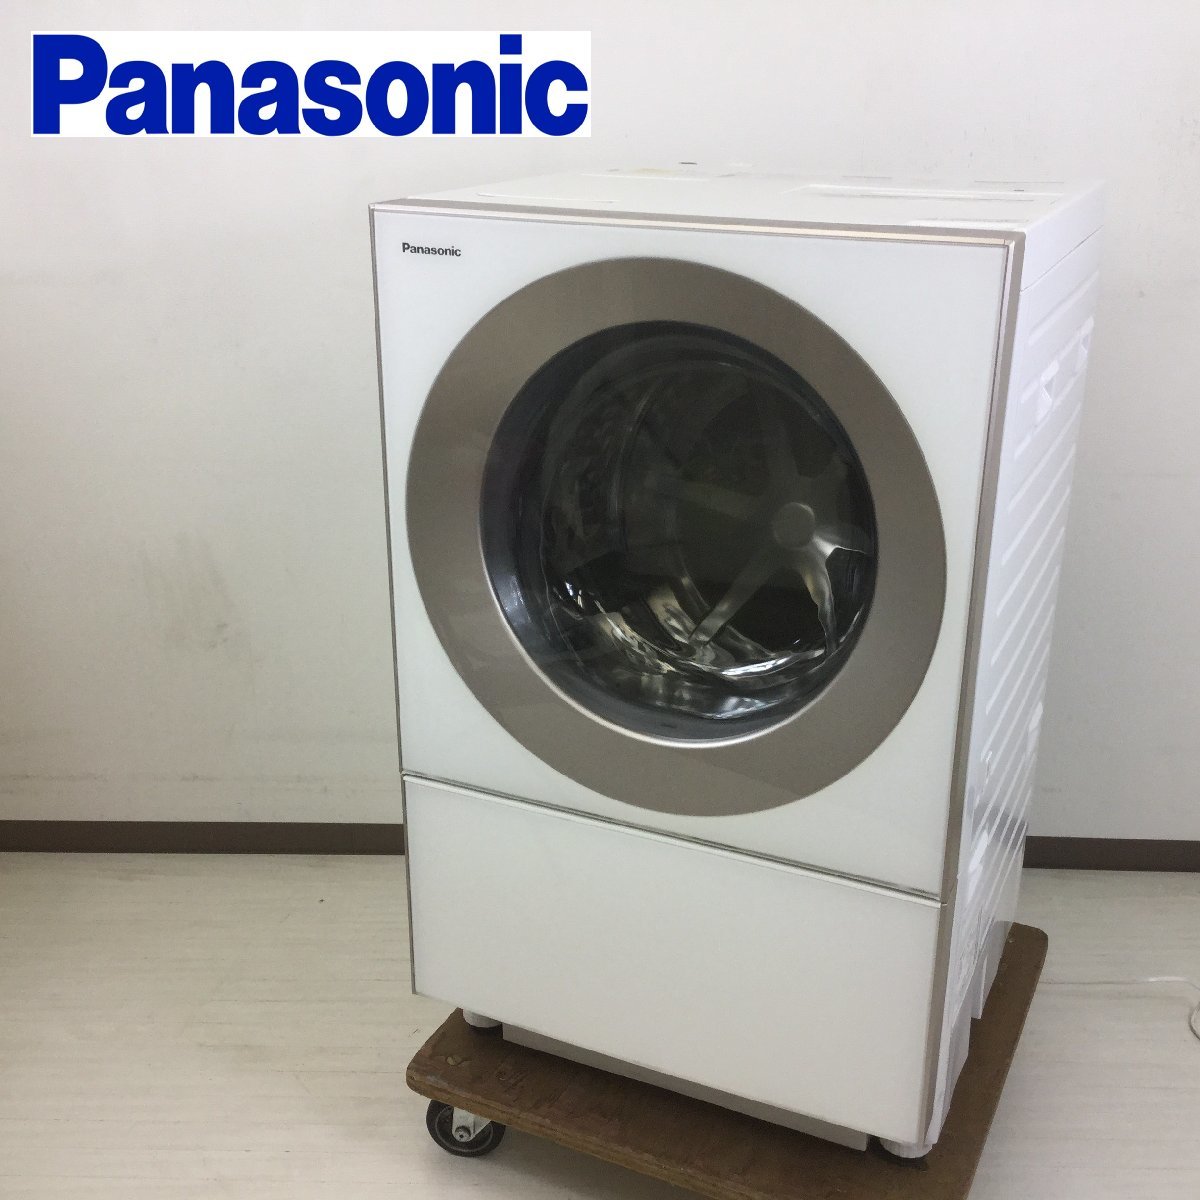 Panasonic パナソニック ななめドラム式洗濯乾燥機 Cuble 安い 激安 プチプラ 高品質 キューブル NA-VG1200L-P 乾燥3kg 洗濯10kg 100%品質保証 2017年製 左開き ピンクゴールド